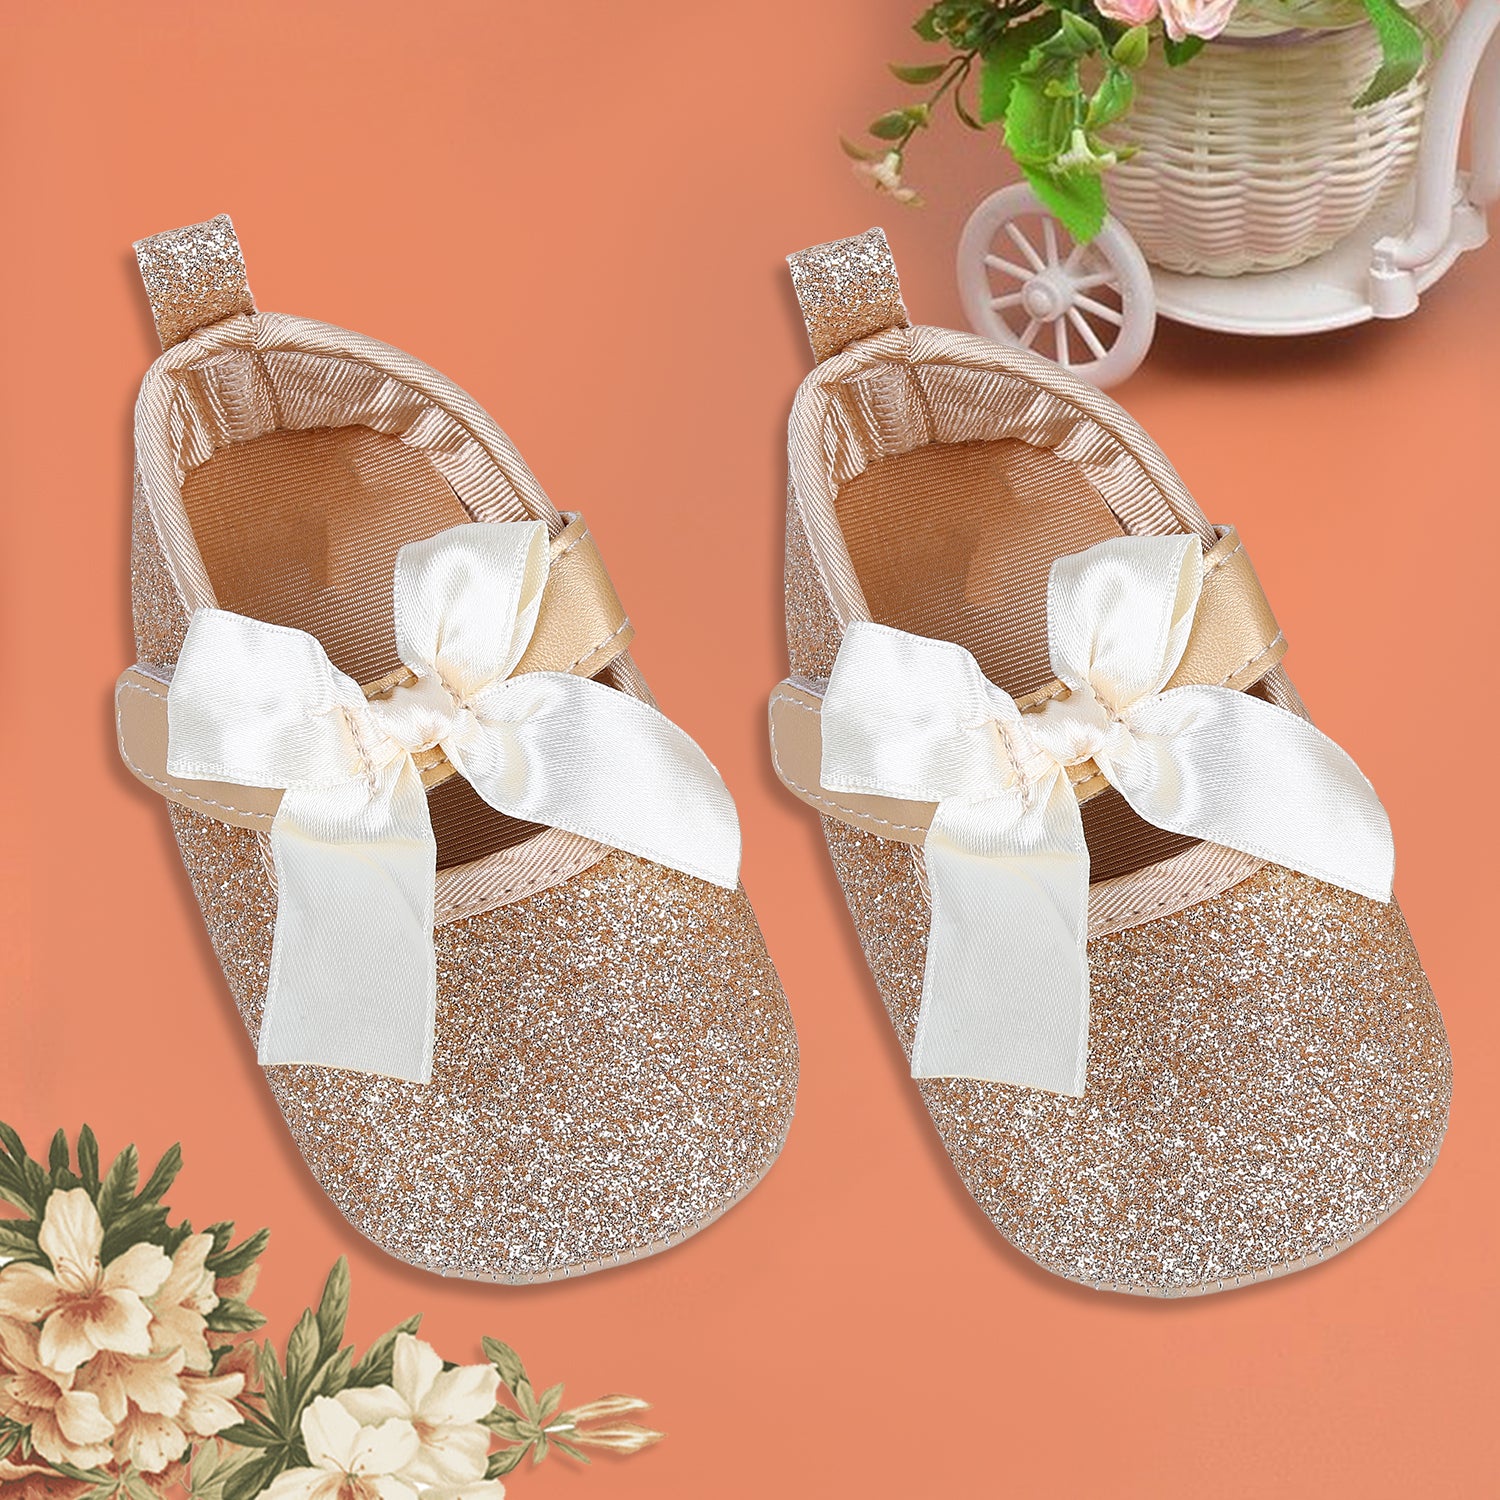 baby ballerina shoes